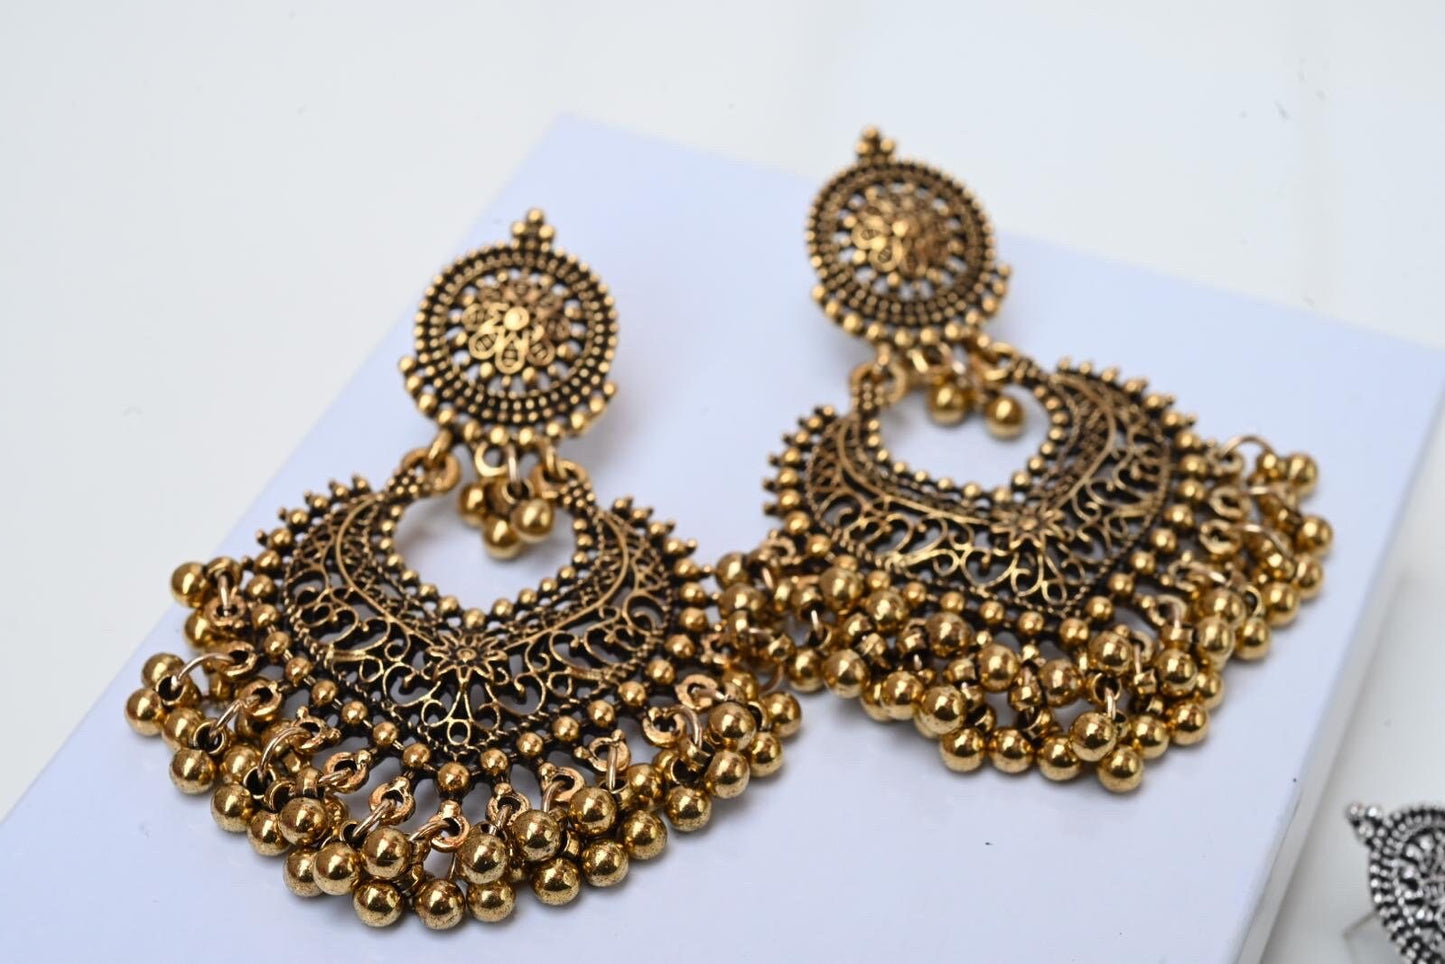 Antique Chaandbali/ Indian Earrings, Pakistani Earrings, Jhumka, Desi Earrings, Afghan Ethnic Tribal Boho Gypsy Earrings, Indian jewellery